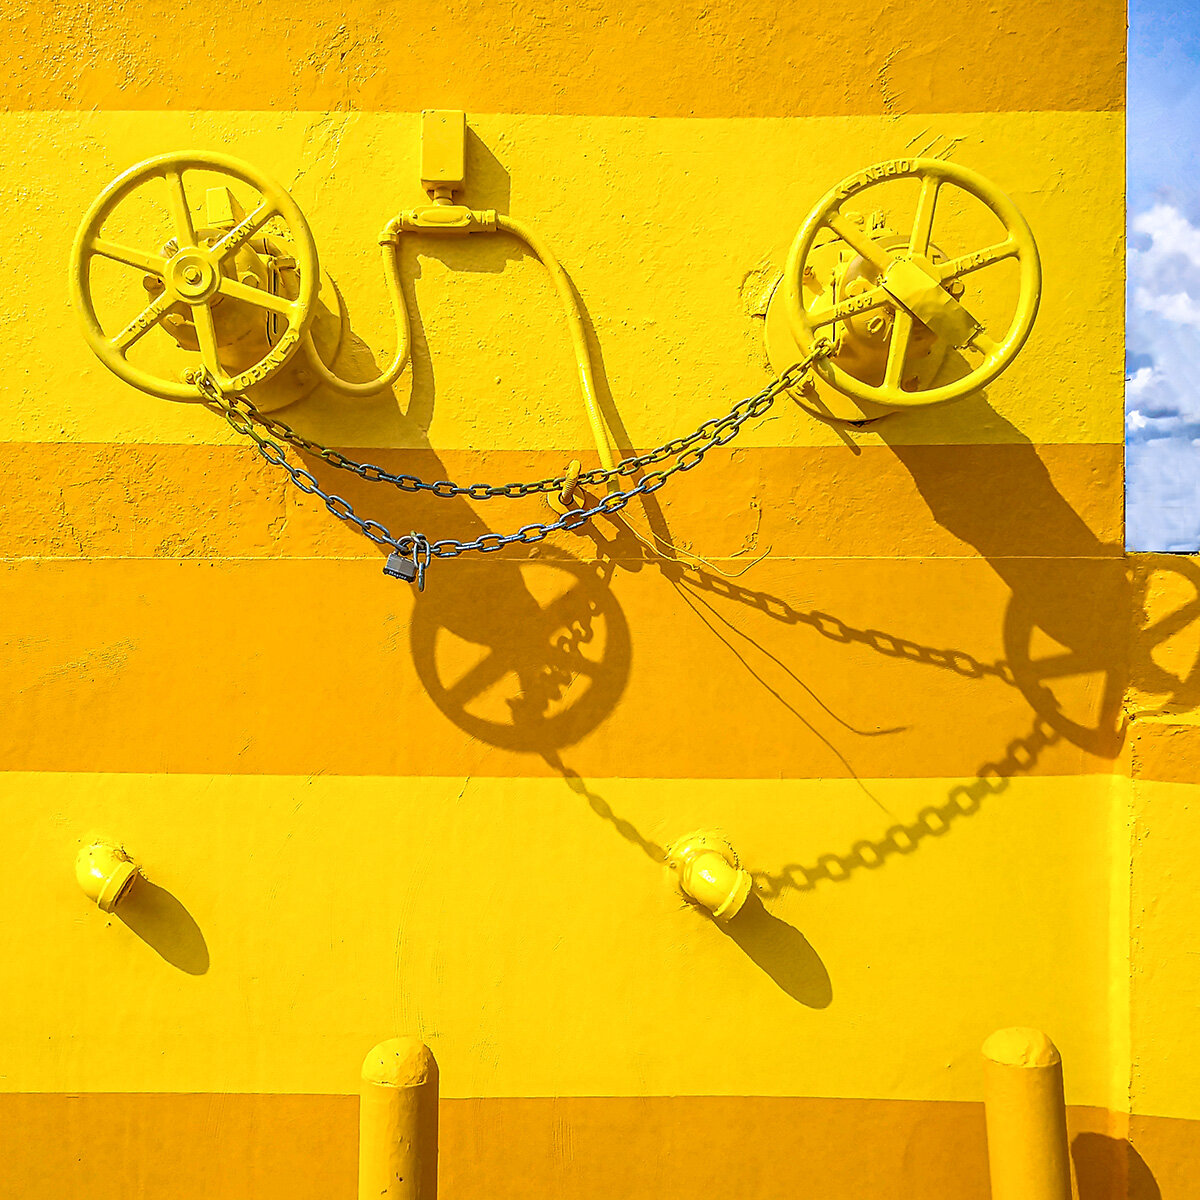 09-18-20 Ardens Garden bike ride Daddy Carson yellow wall shadows_square IG_final.jpg